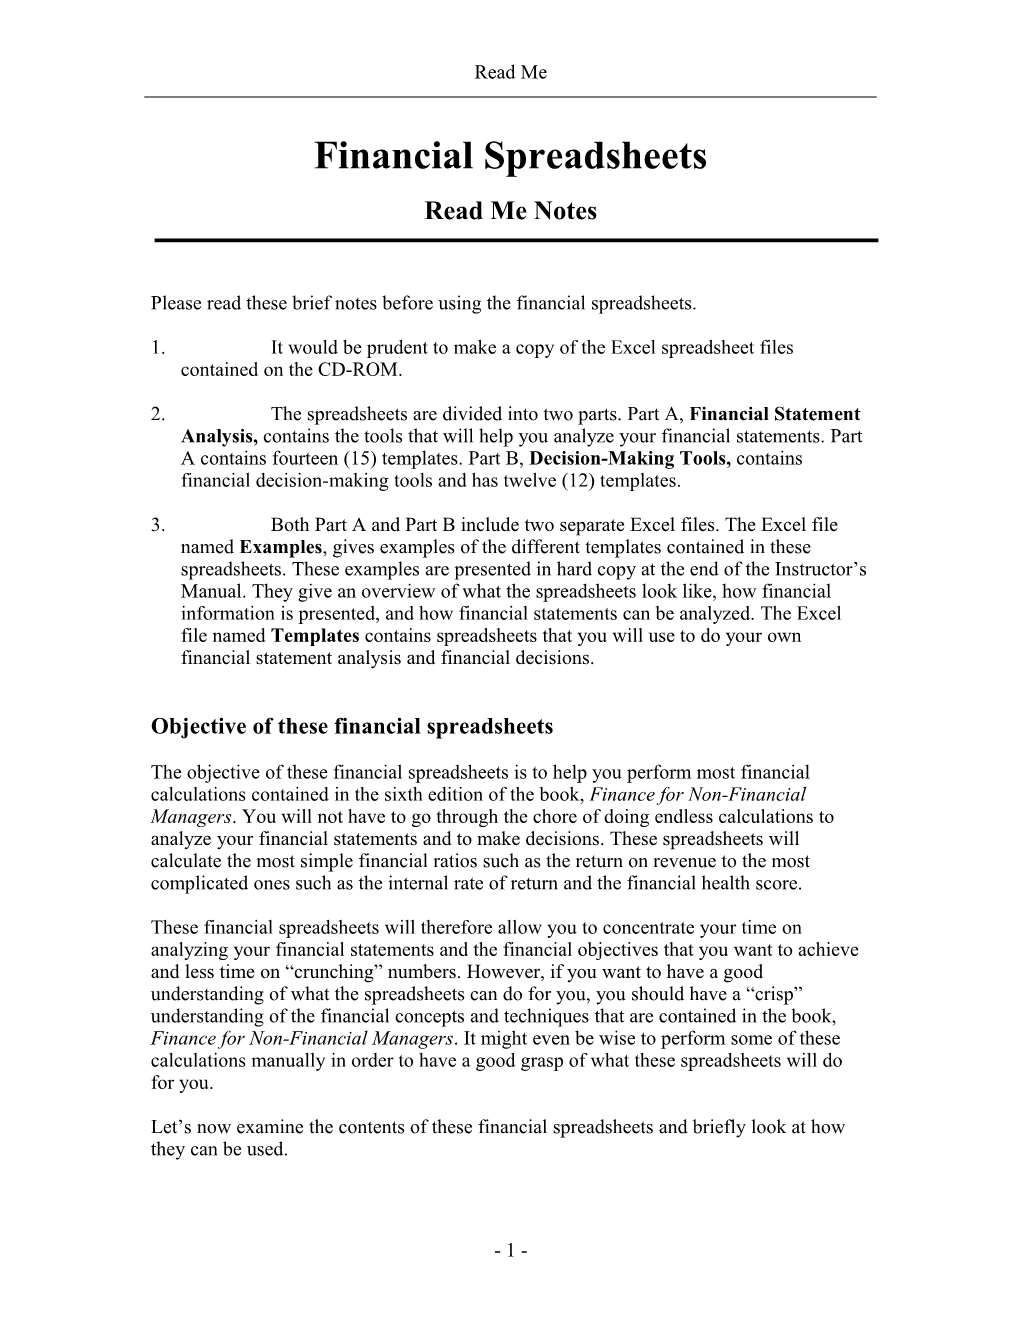 Financial Spreadsheets